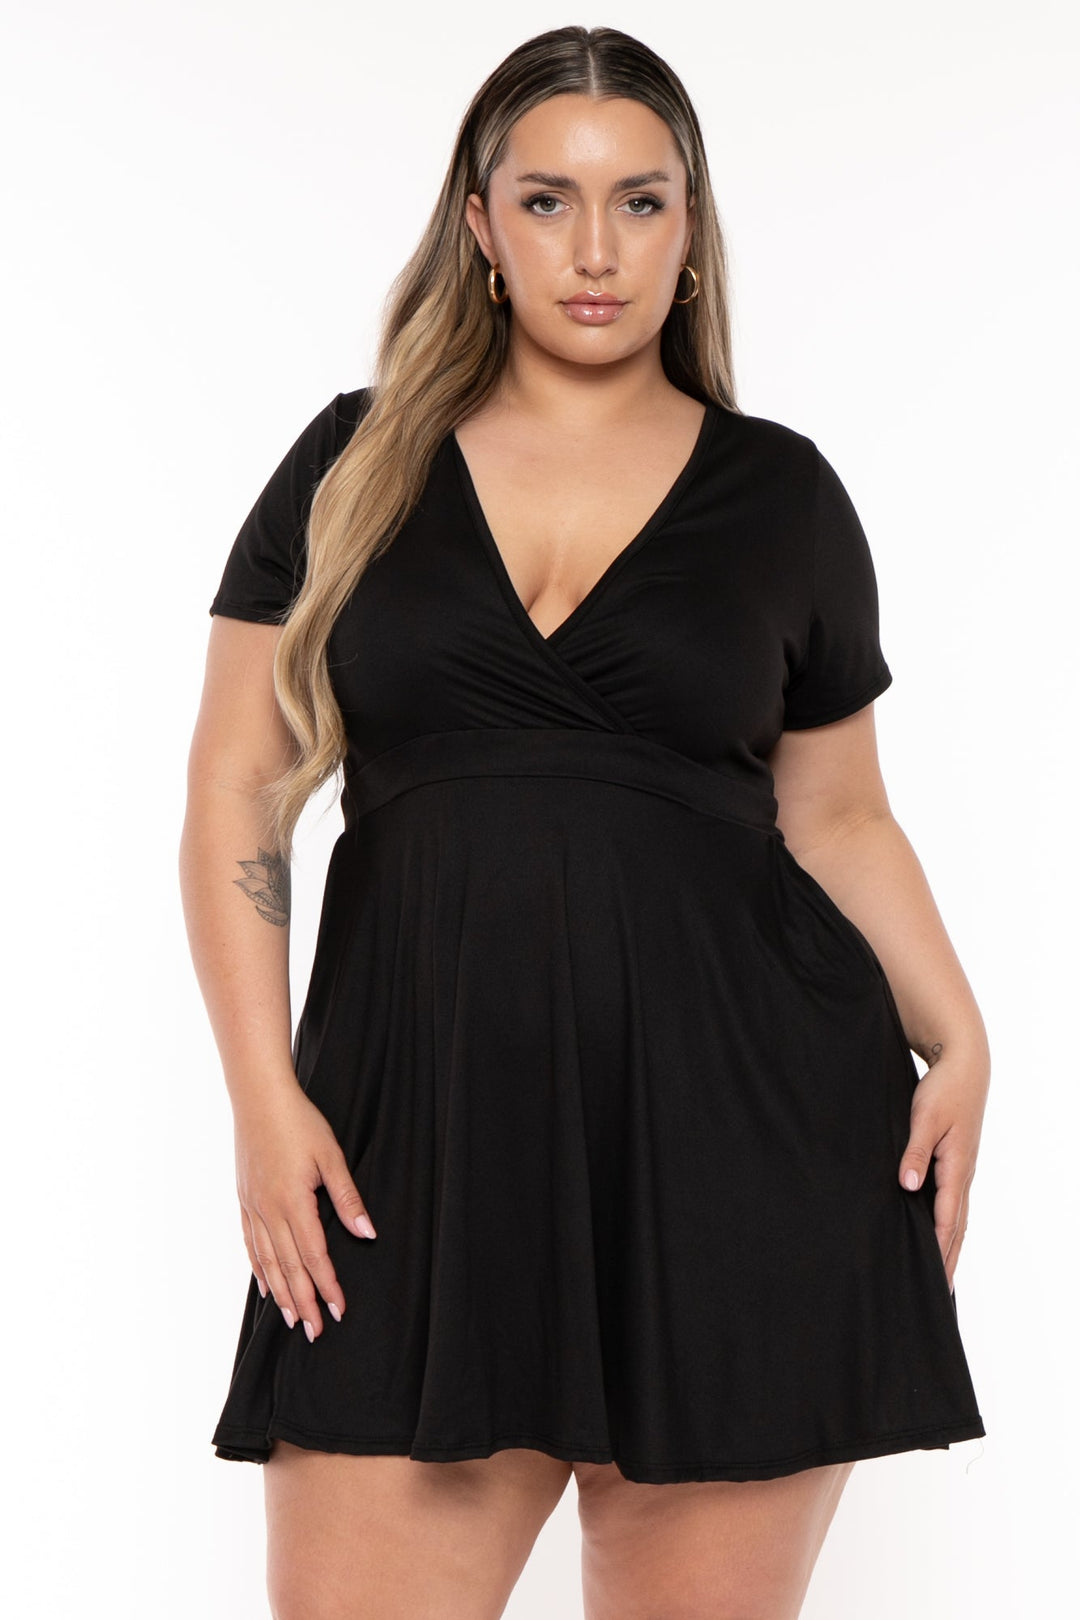 Curvy Sense Dresses Plus Size Elaine Flare Dress - Black